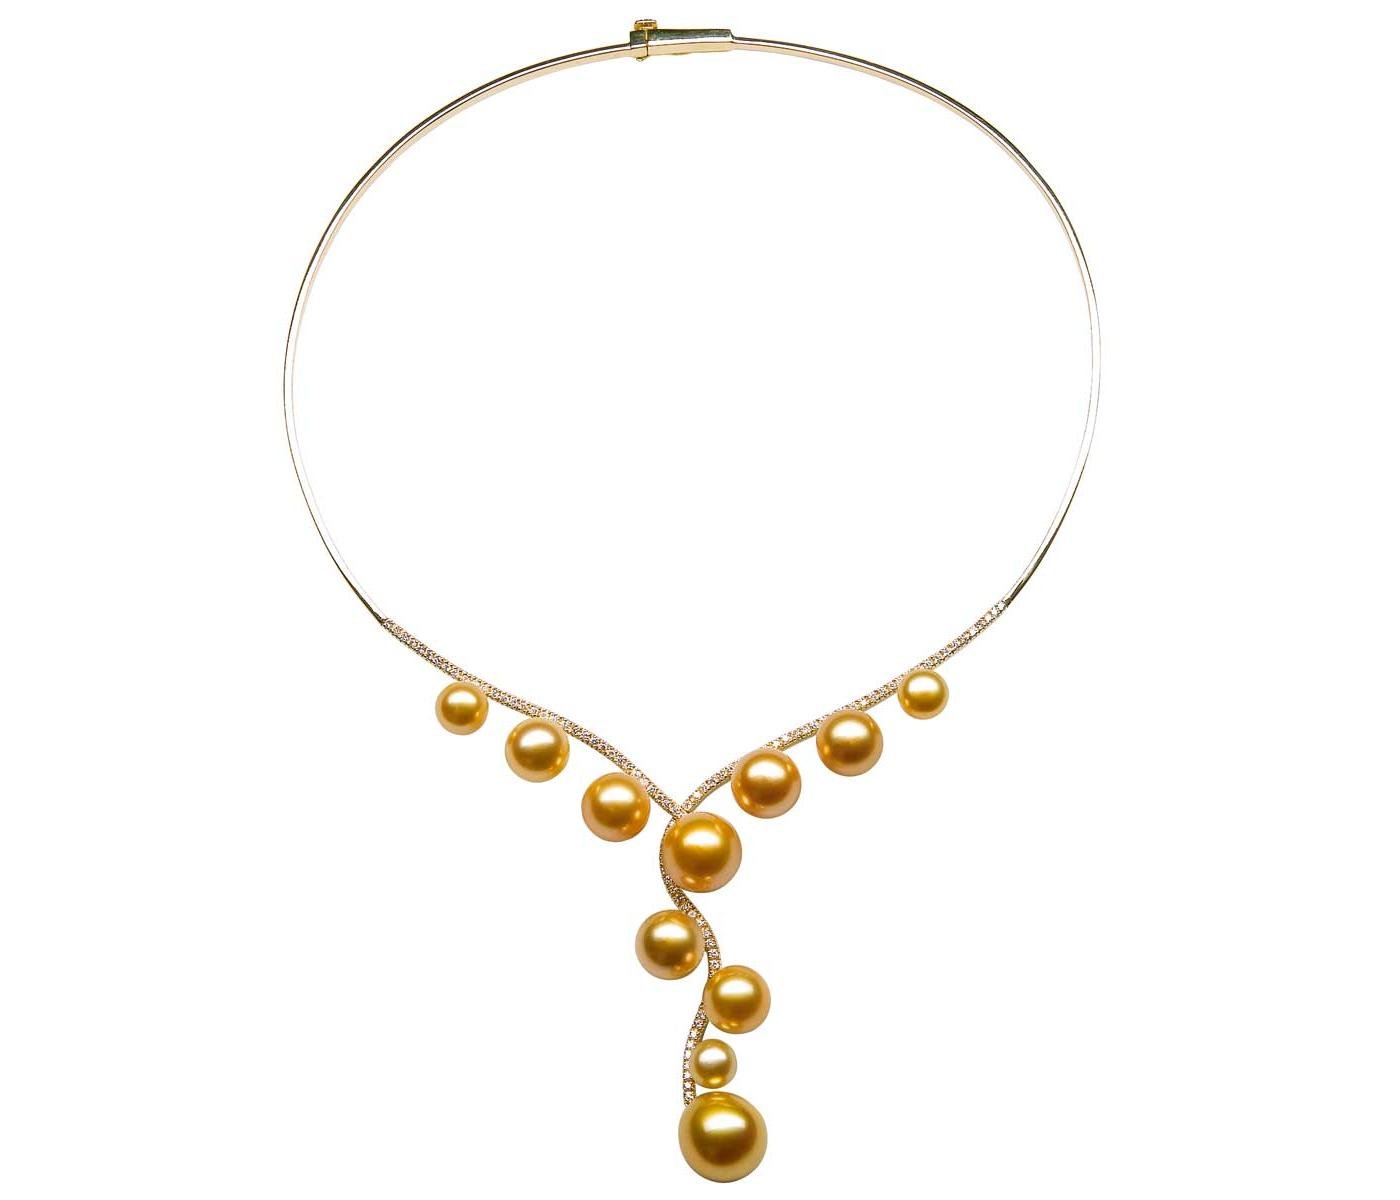 Necklace by Jewelmer